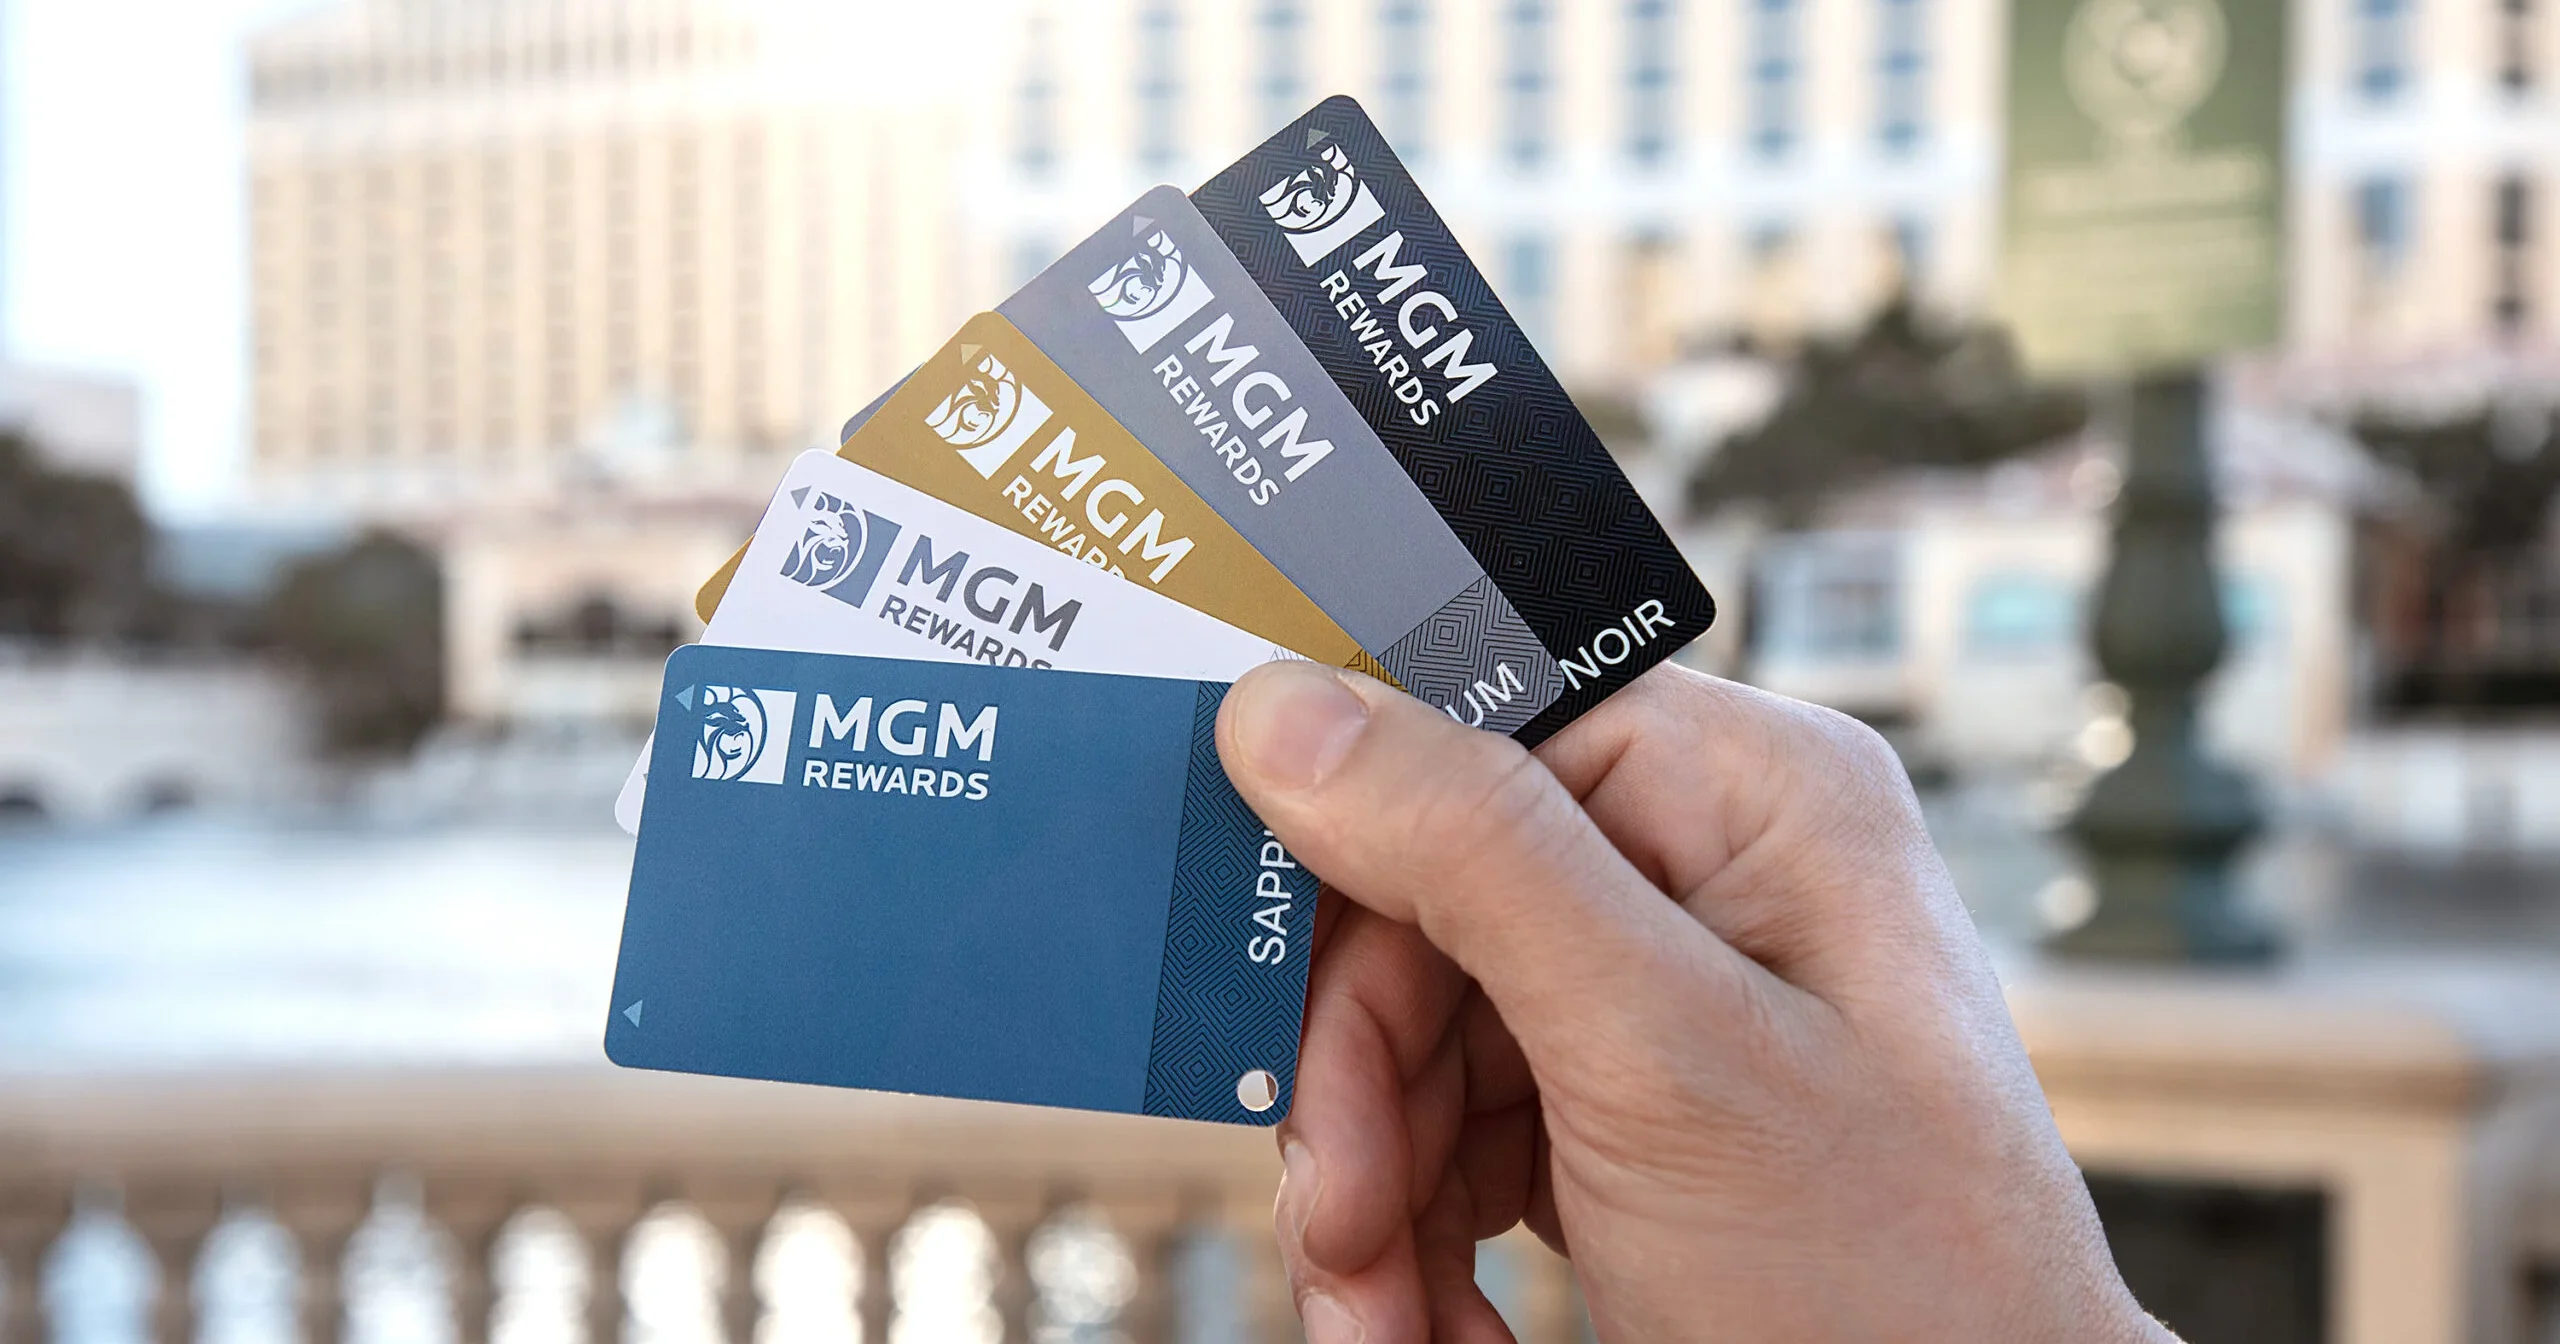 Las Vegas rewards card MGM - great for free rooms in Las Vegas hotels